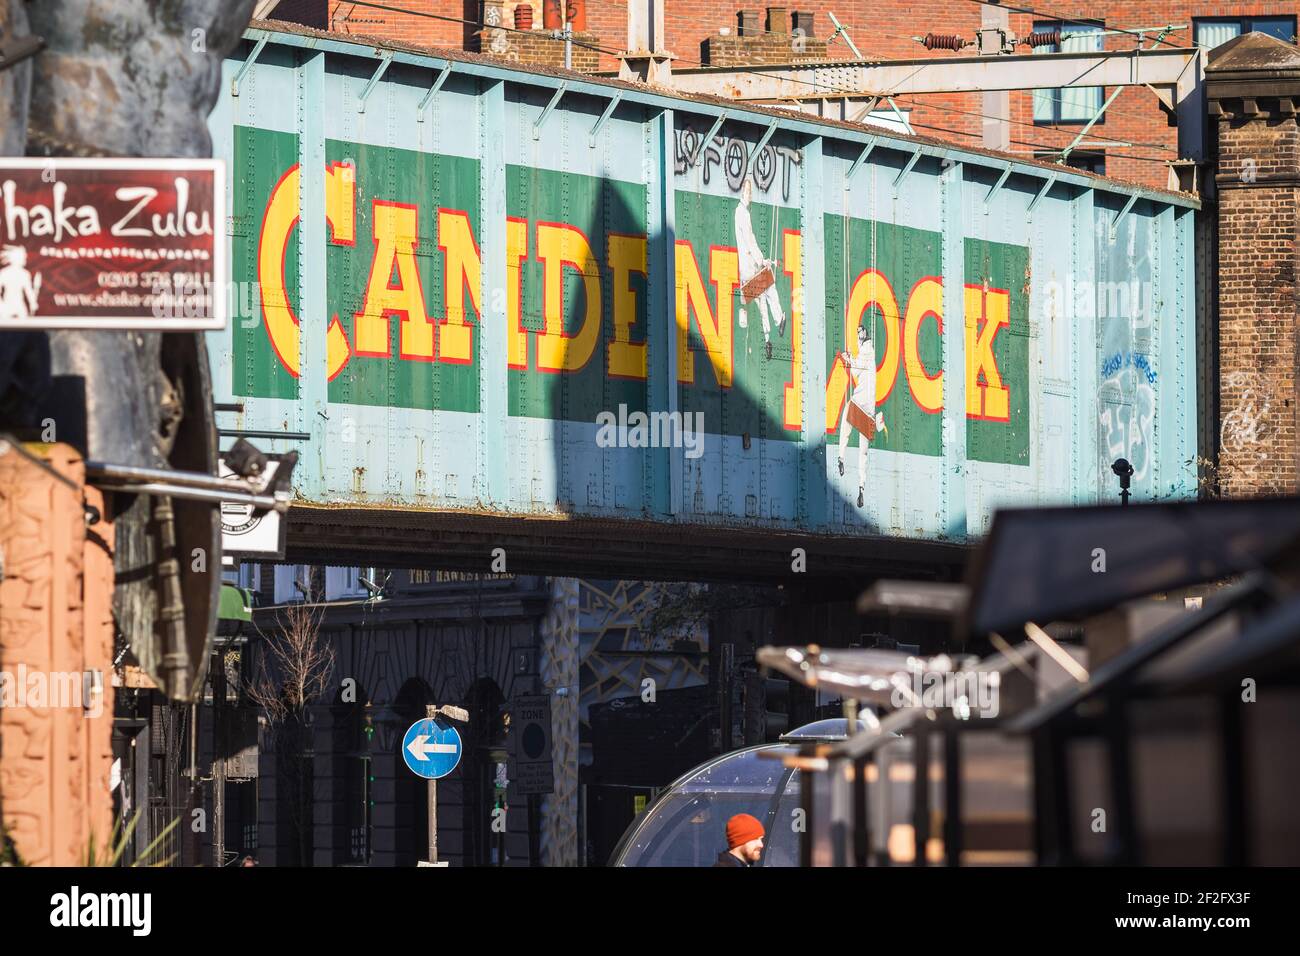 London, UK - 26 February, 2021 - Camden Lock bridge sign at Camden Market Stock Photo